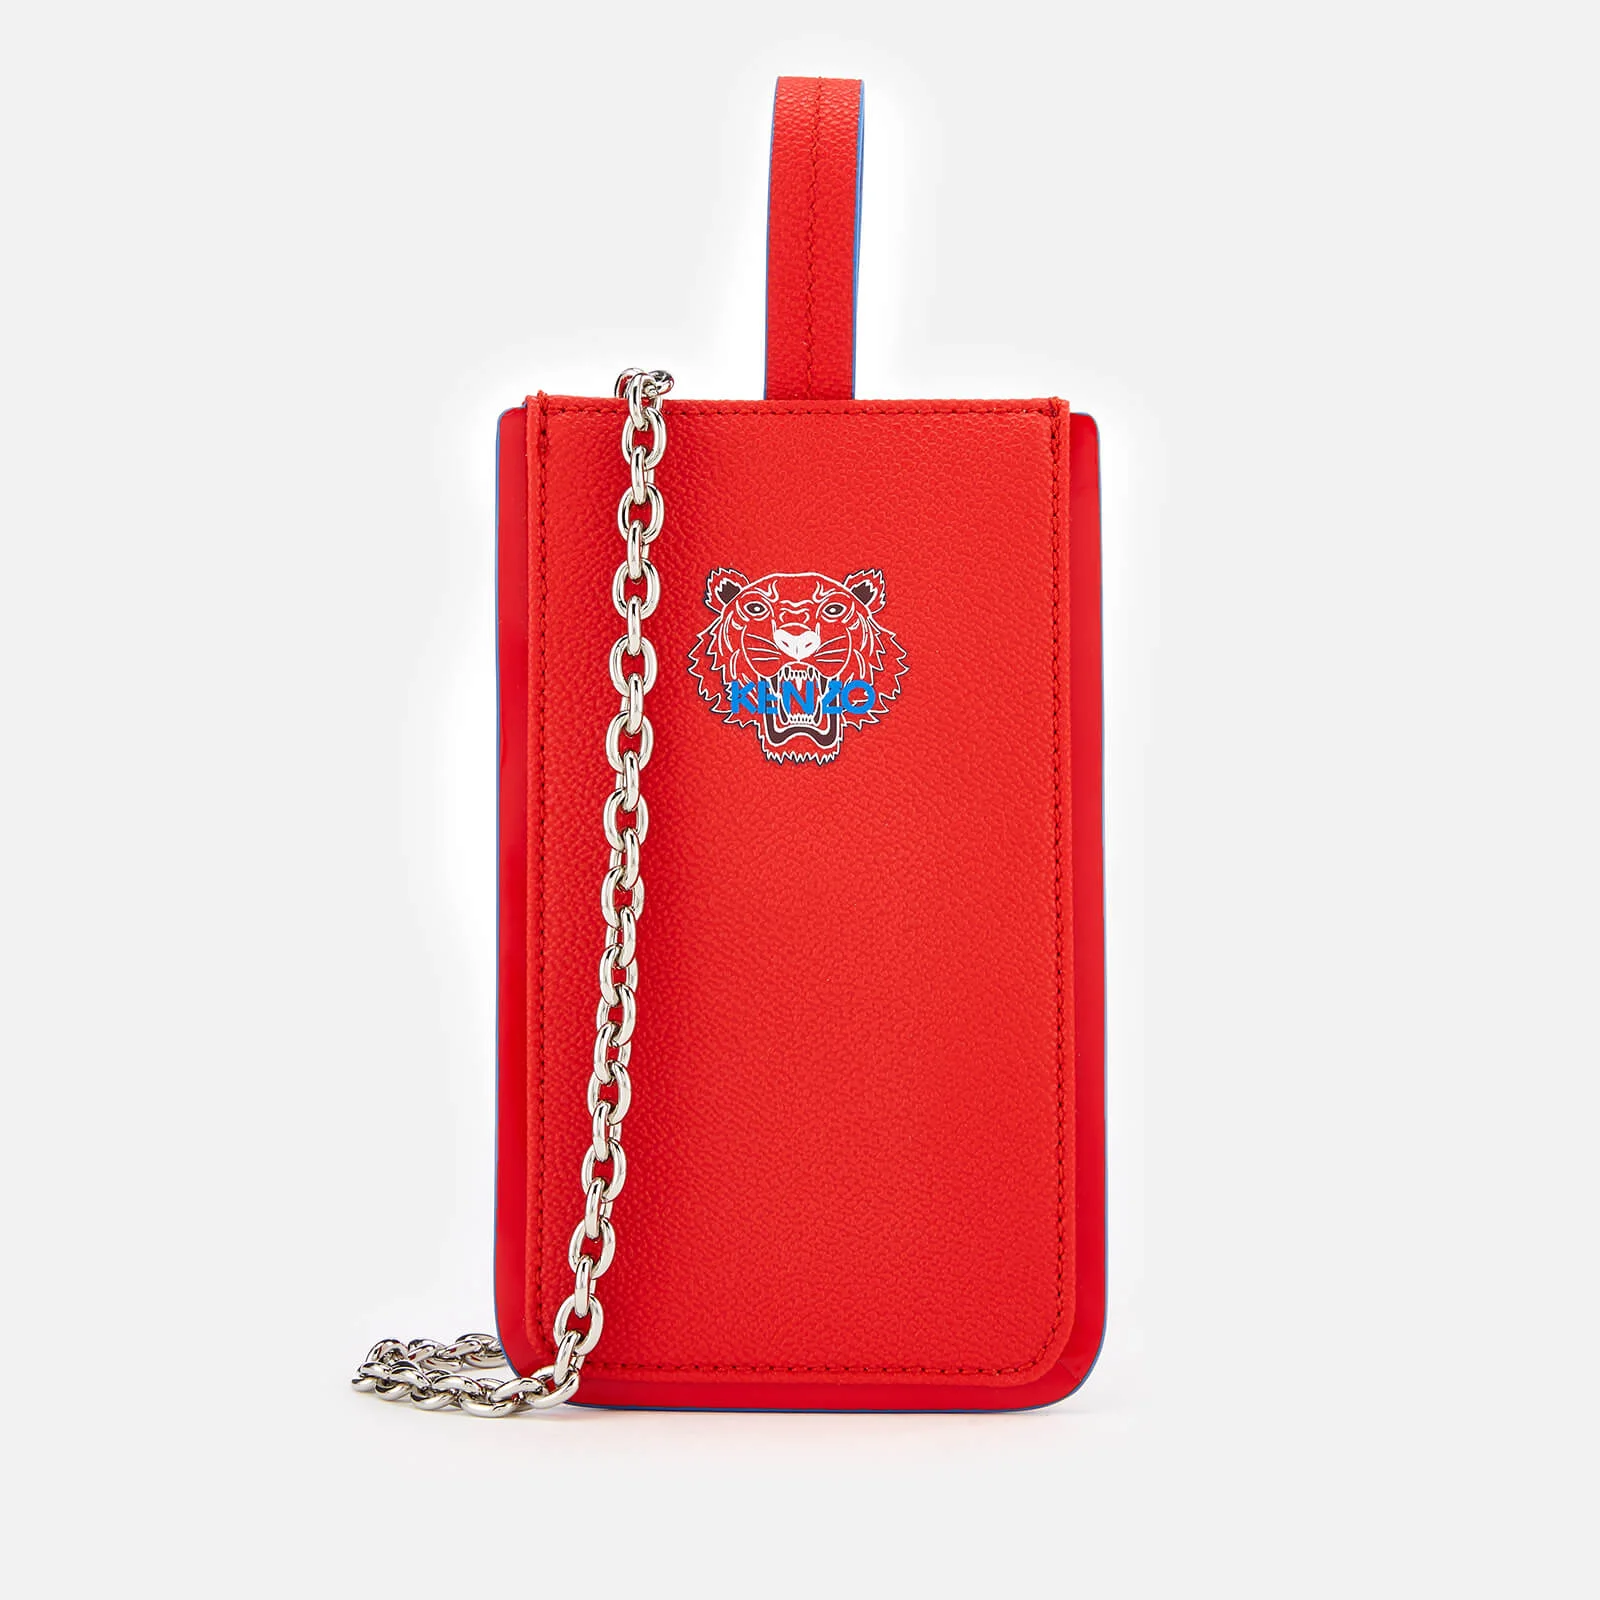 KENZO Women's Tiger Phone Case on Chain - Medium Red Image 1